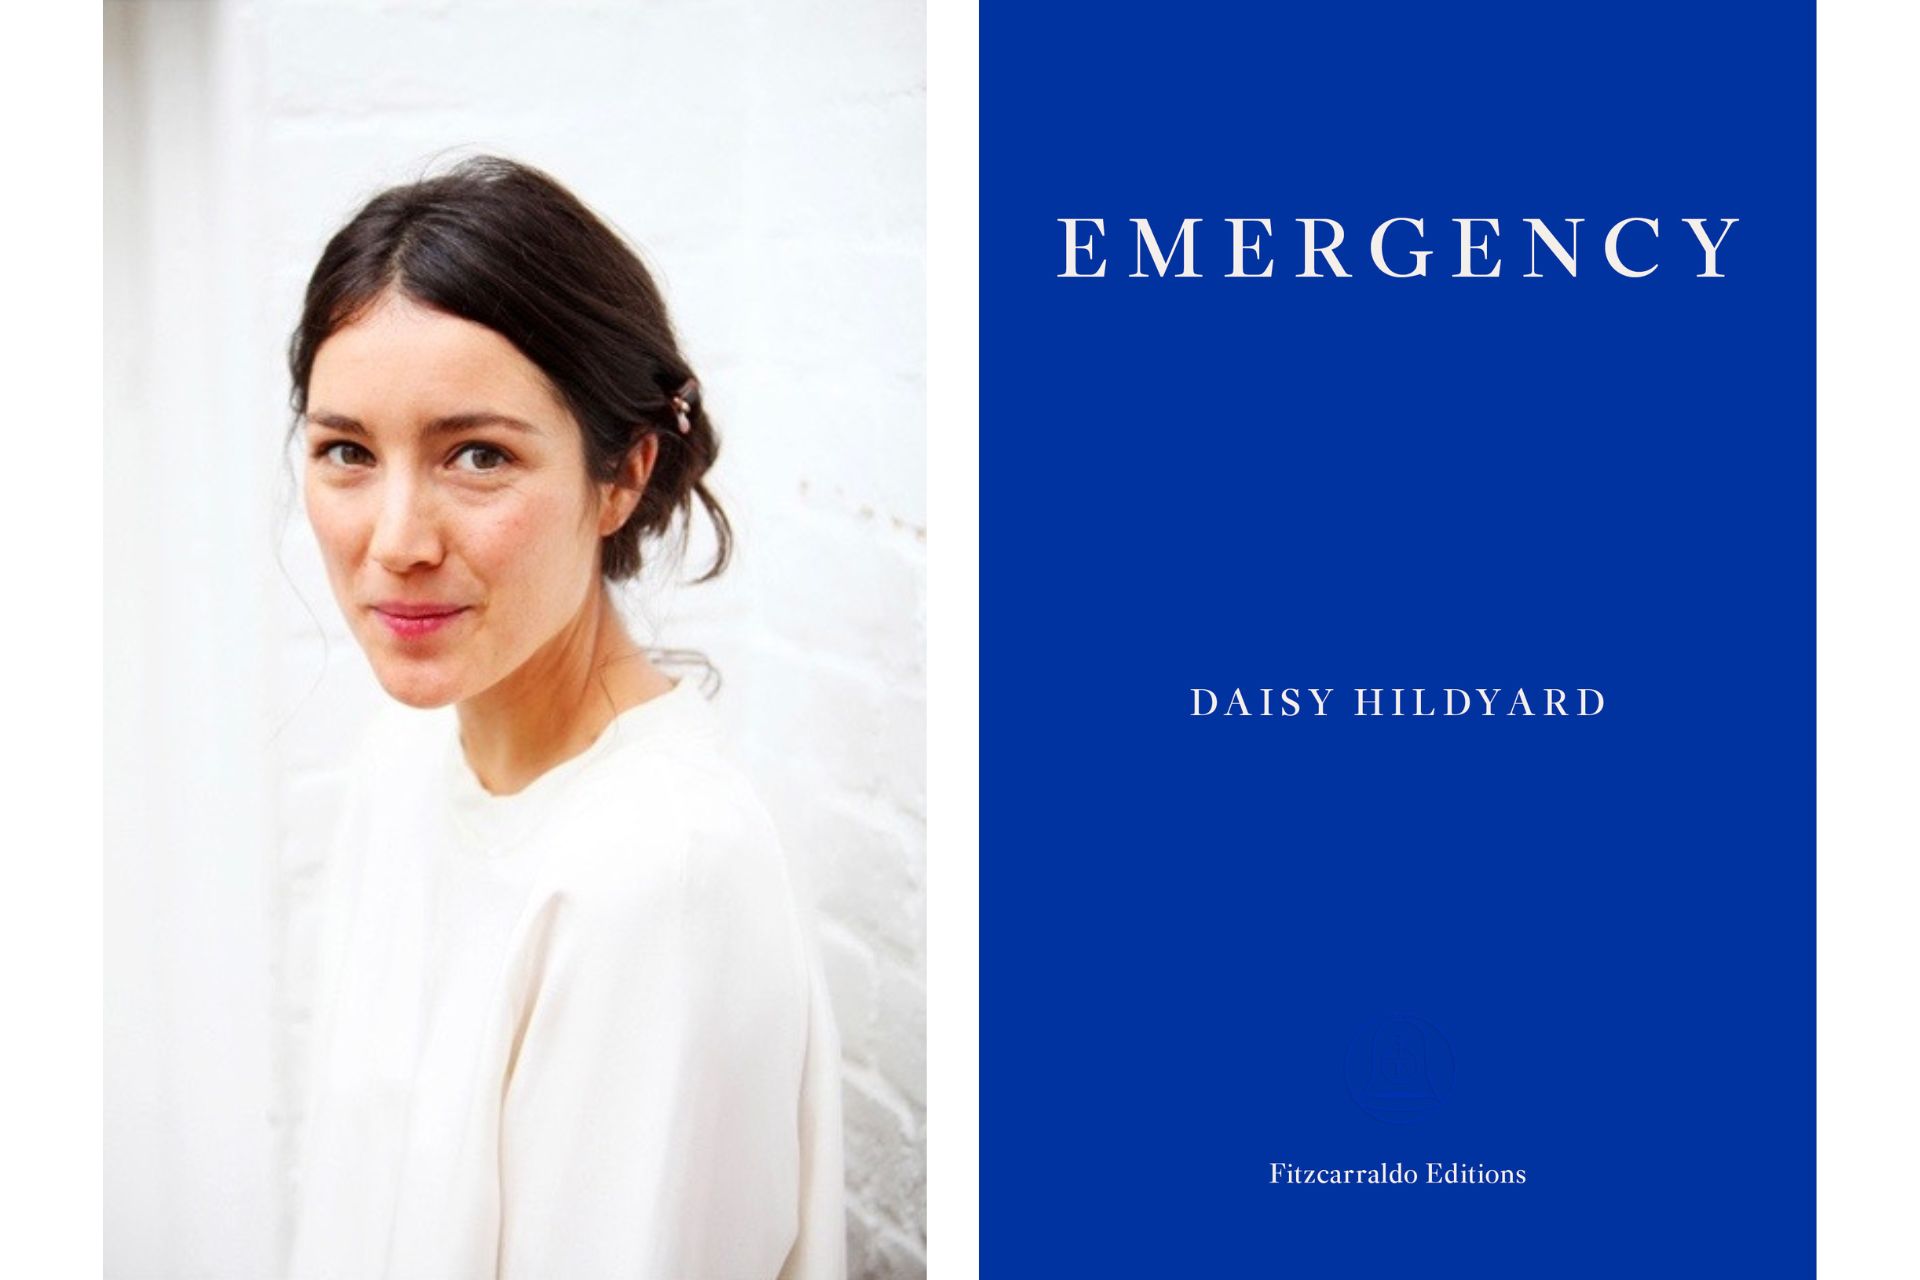 Daisy Hildyard and her novel, Emergency